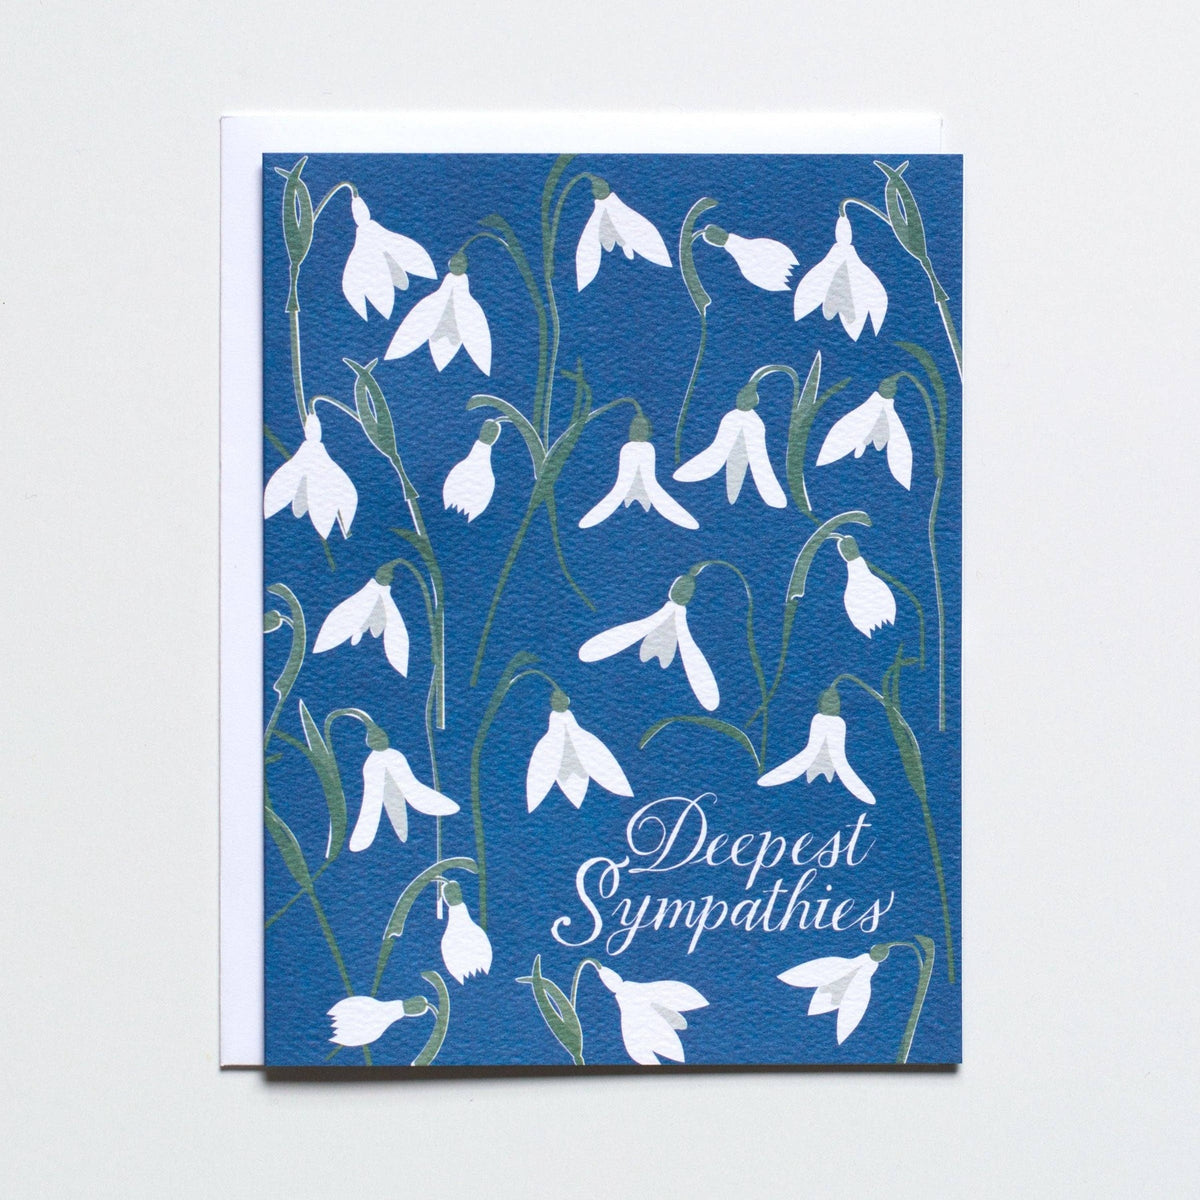 Banquet Workshop - Snowdrops Sympathies Note Card